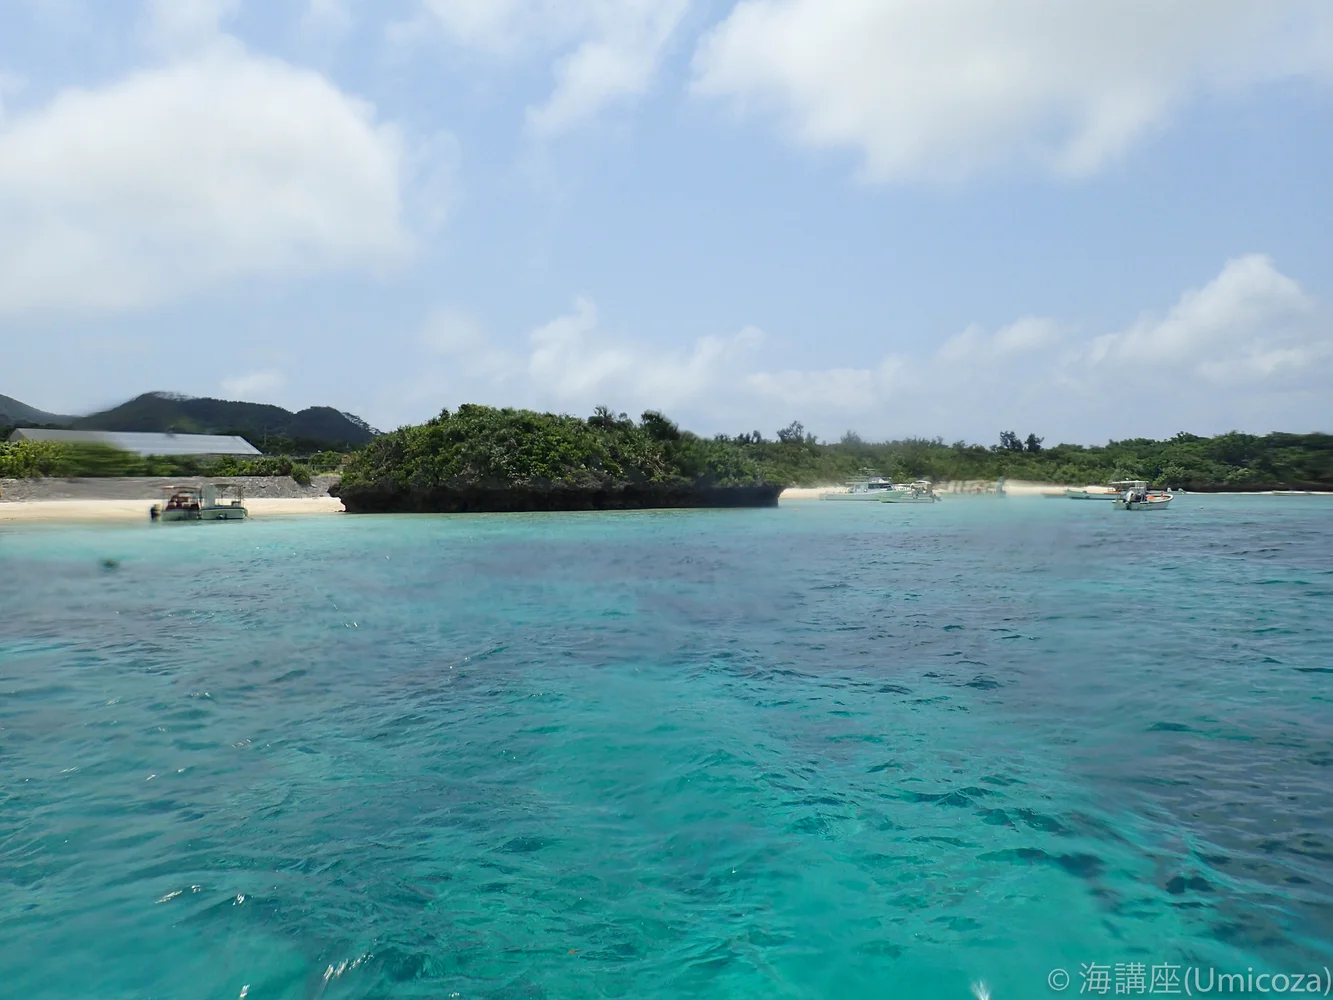 Book Snorkeling Tour in Ishigaki Island’s Emerald Waters (Manta Ray & Turtle Search Japan)